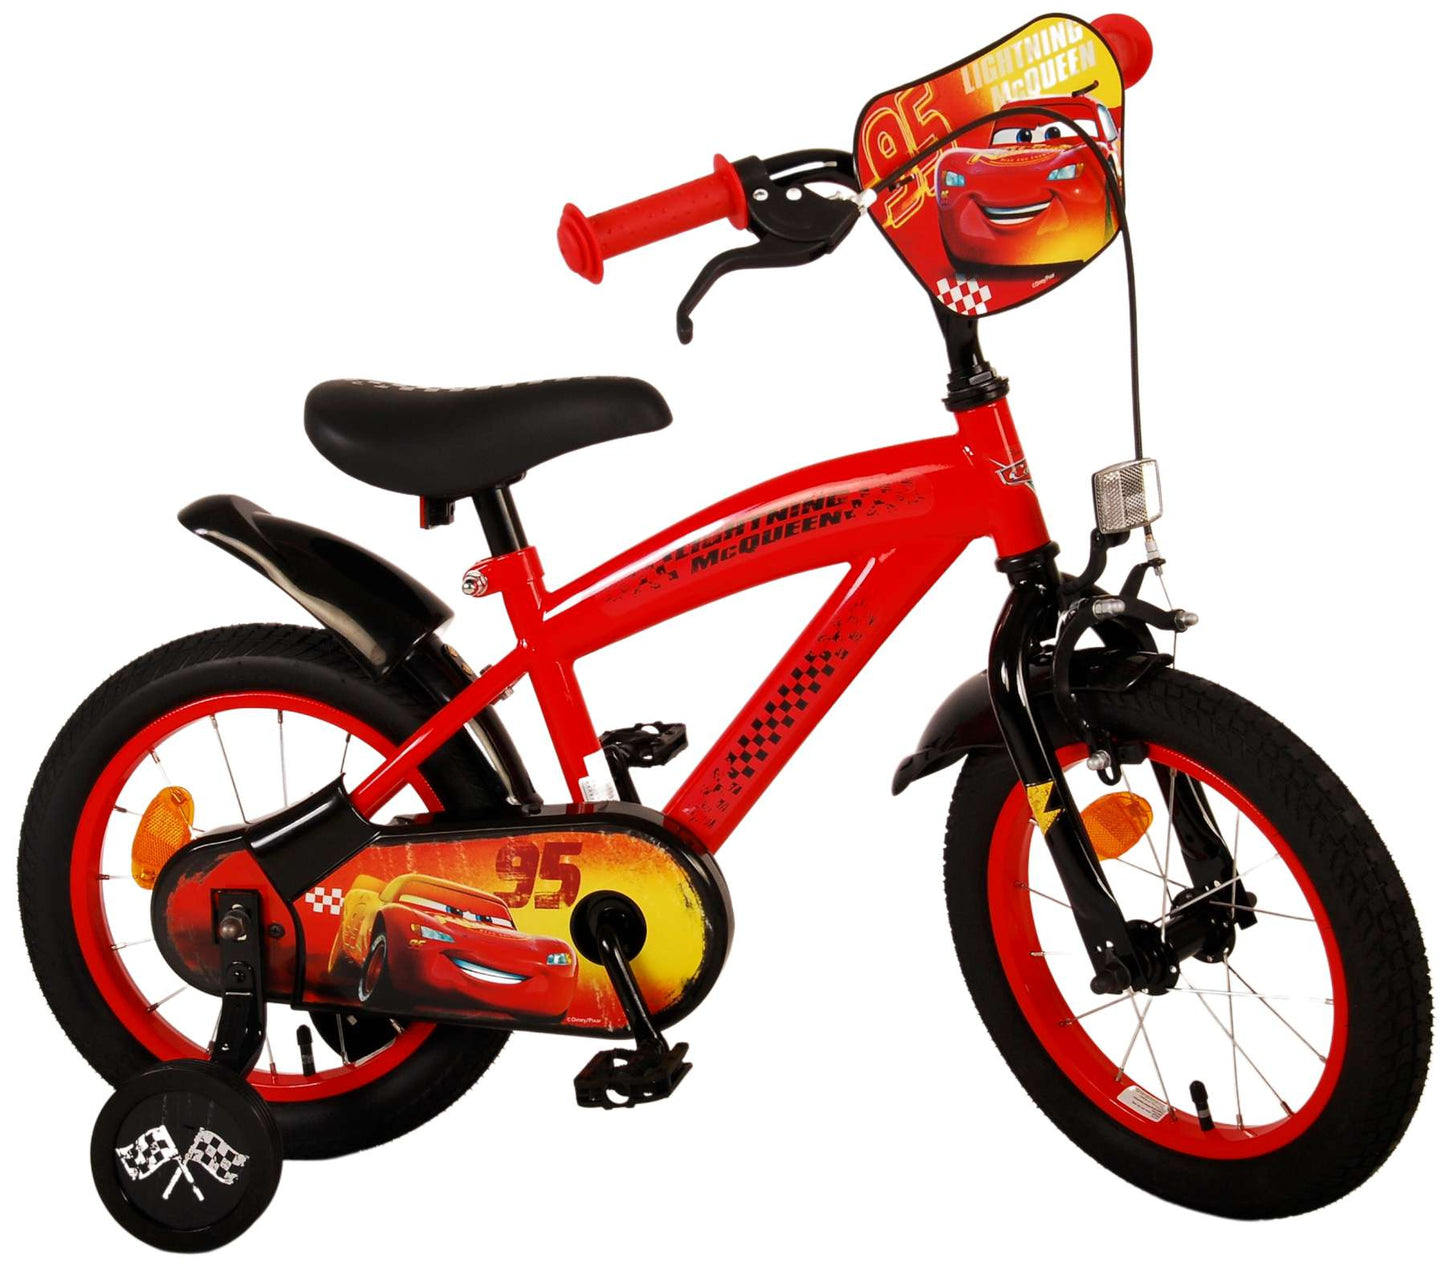 Bicicleta para niños de Disney Cars - Niños - 14 pulgadas - Rojo